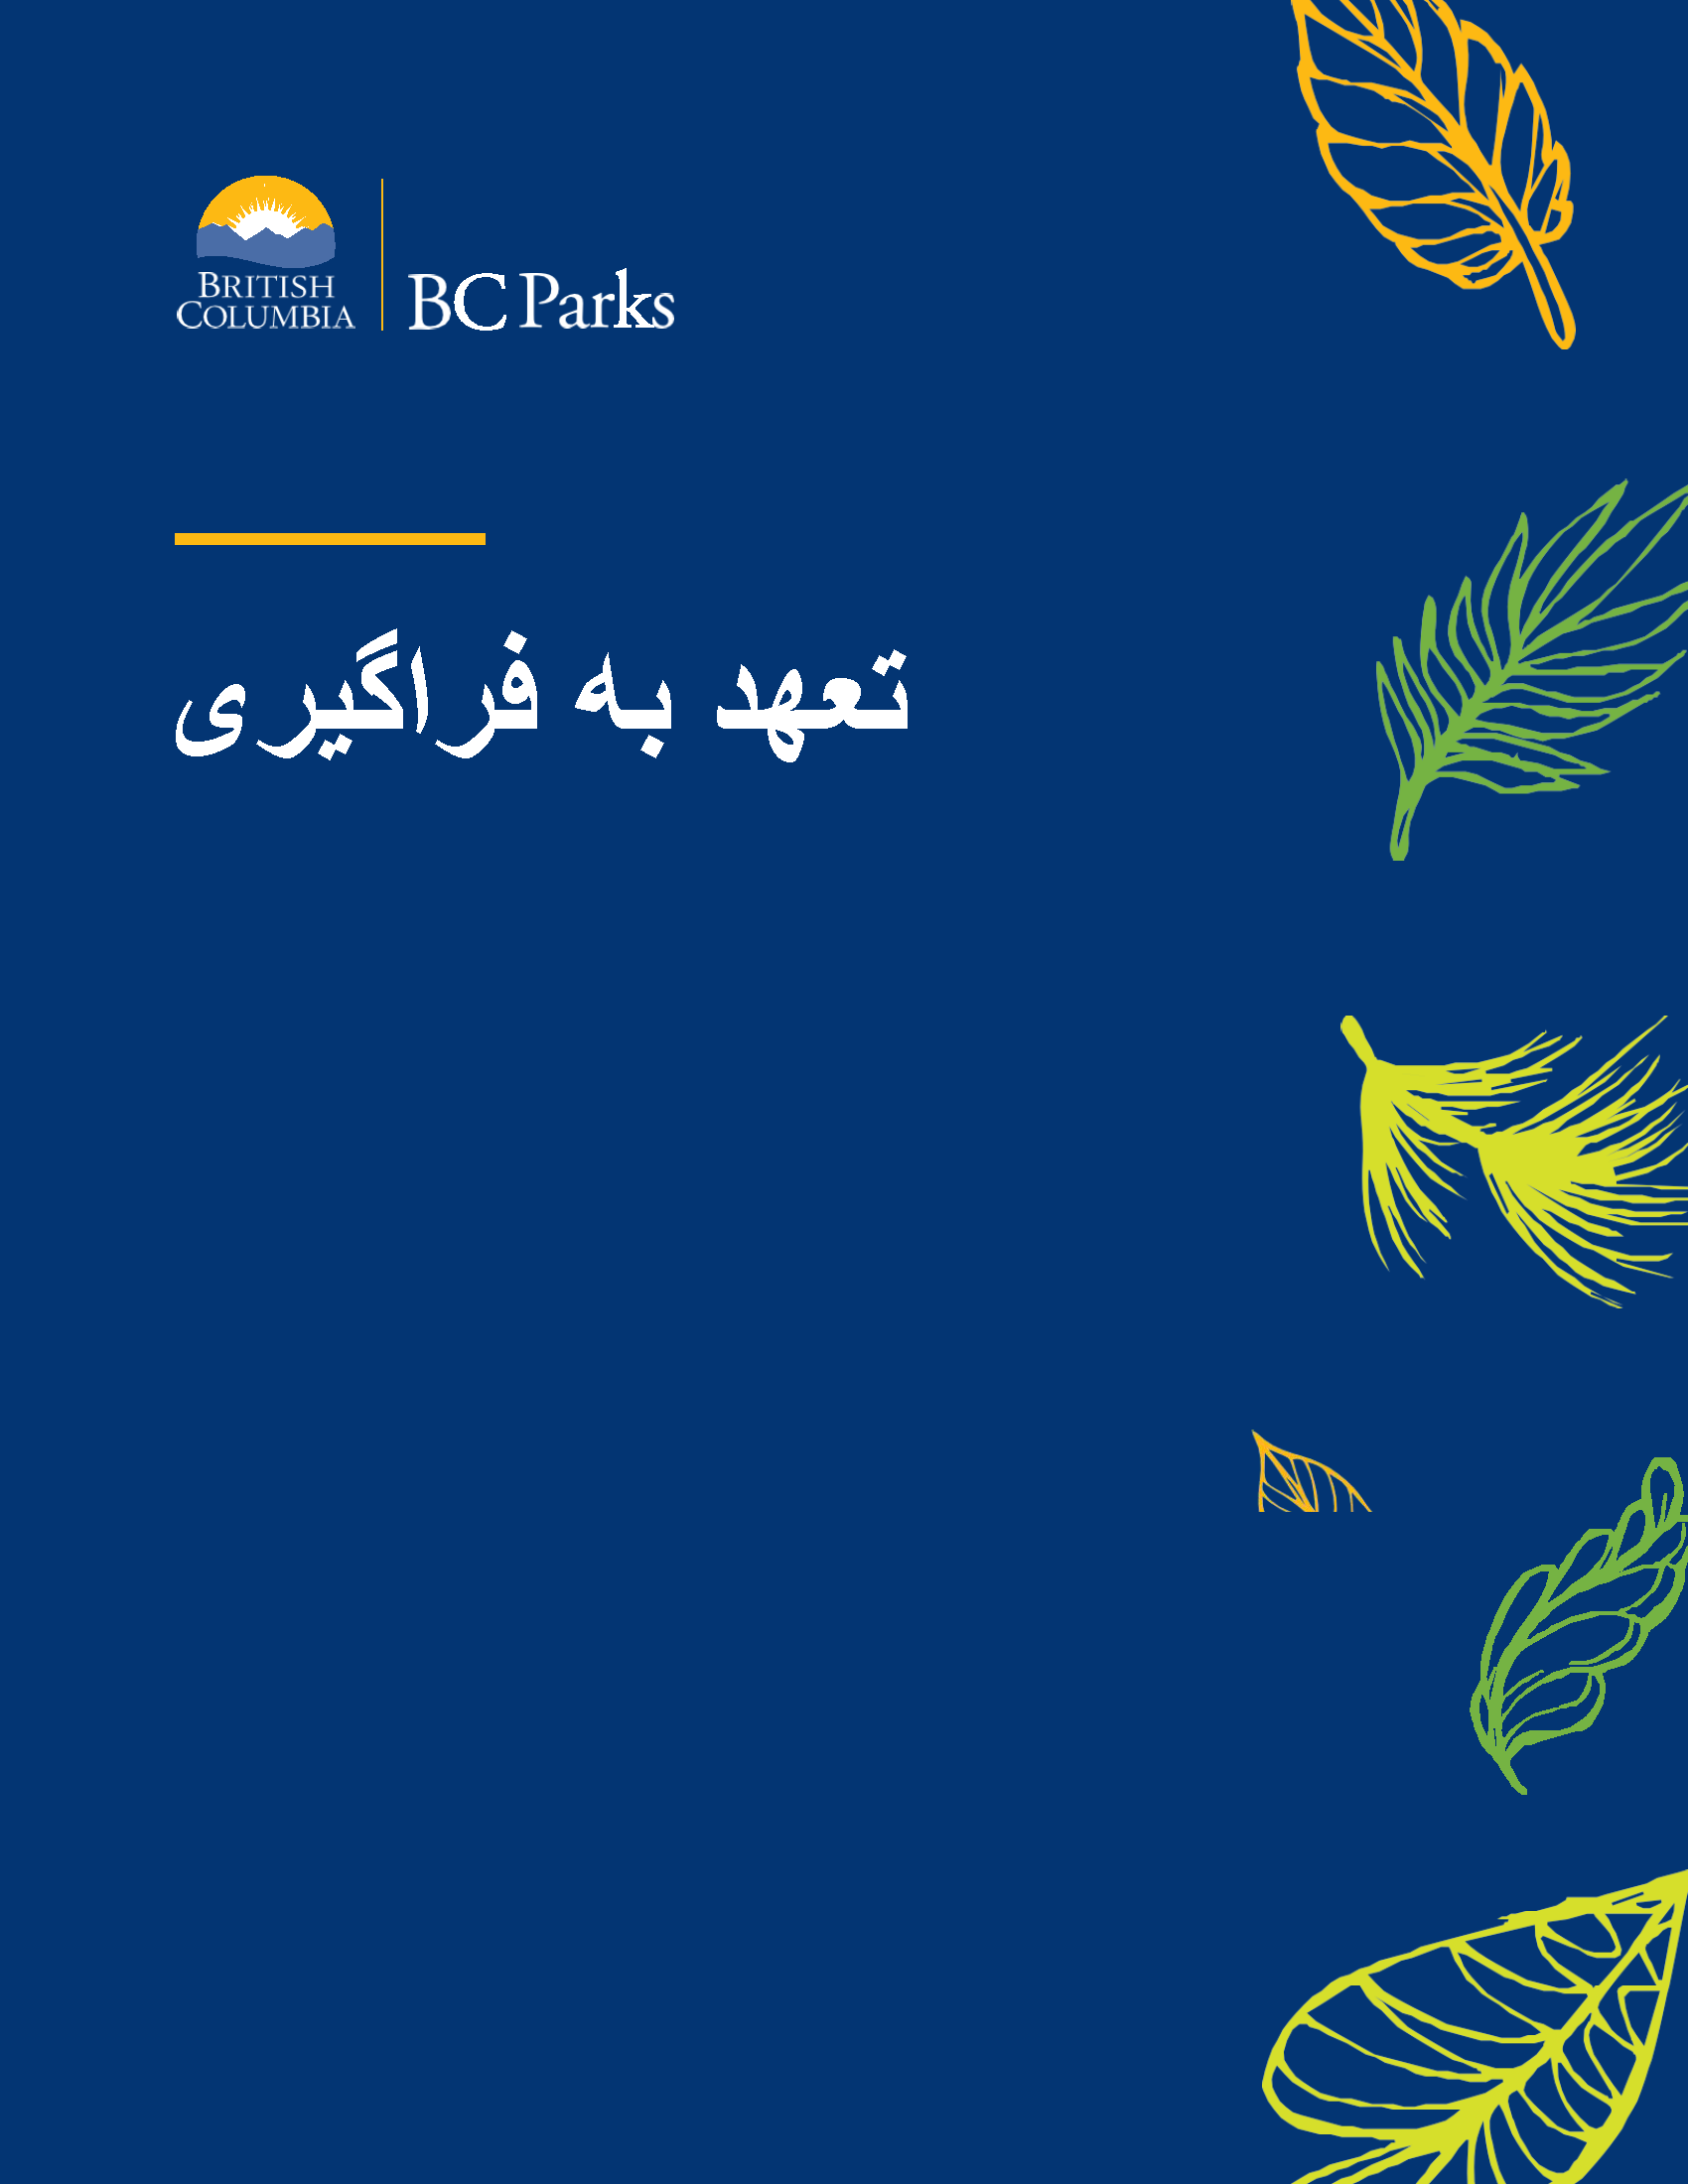 BC Parks Commitment to Inclusion in Farsi